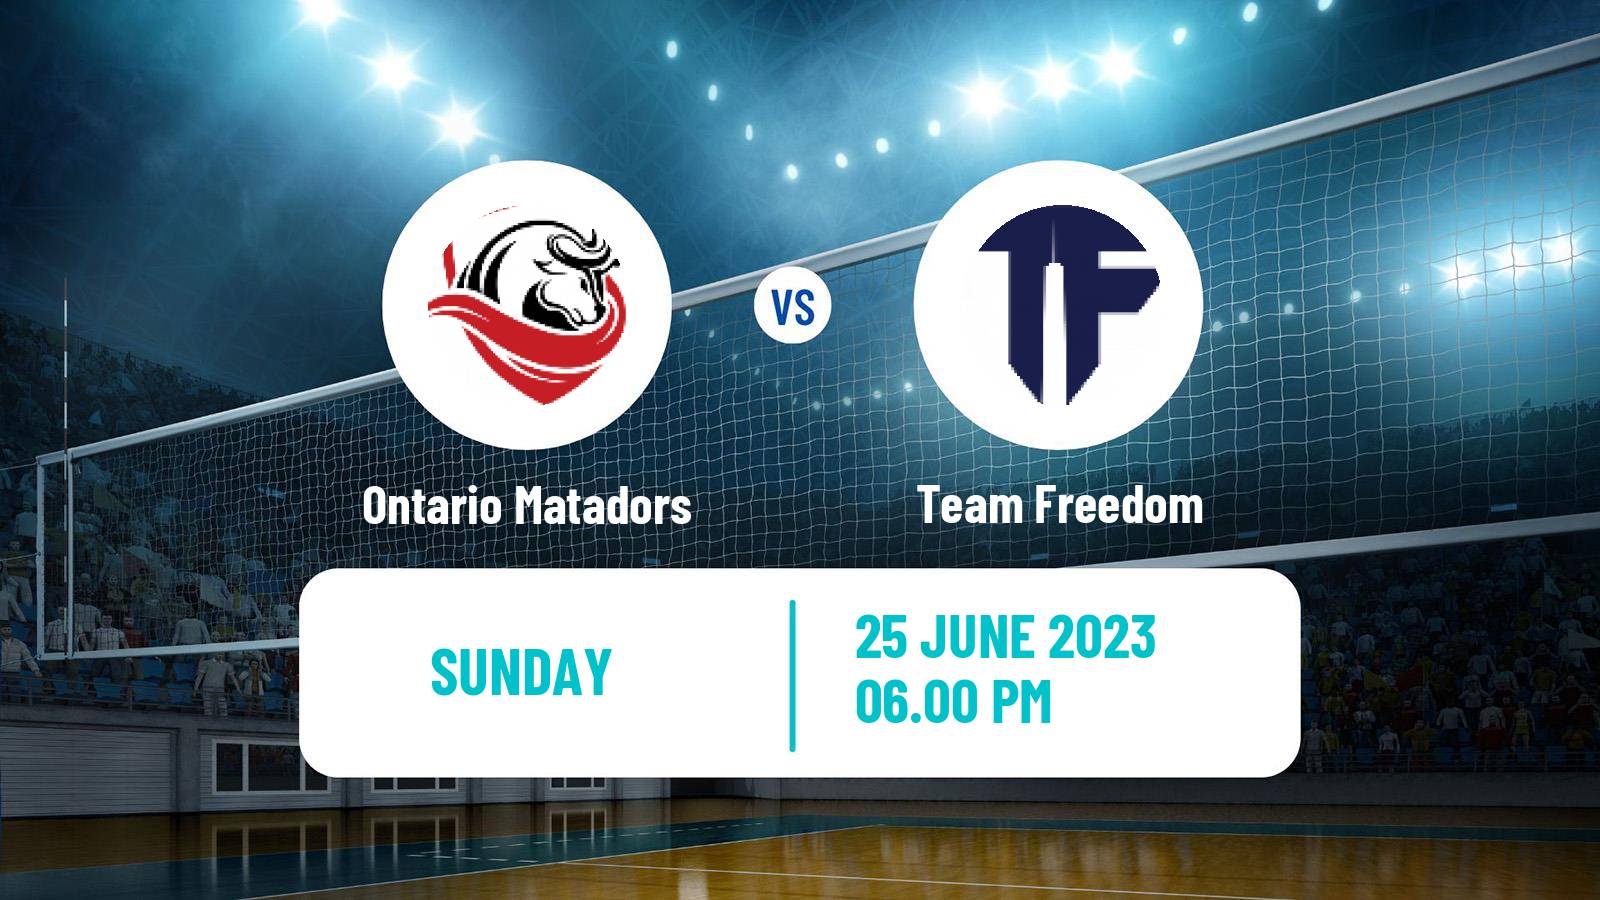 Volleyball NVA Ontario Matadors - Team Freedom